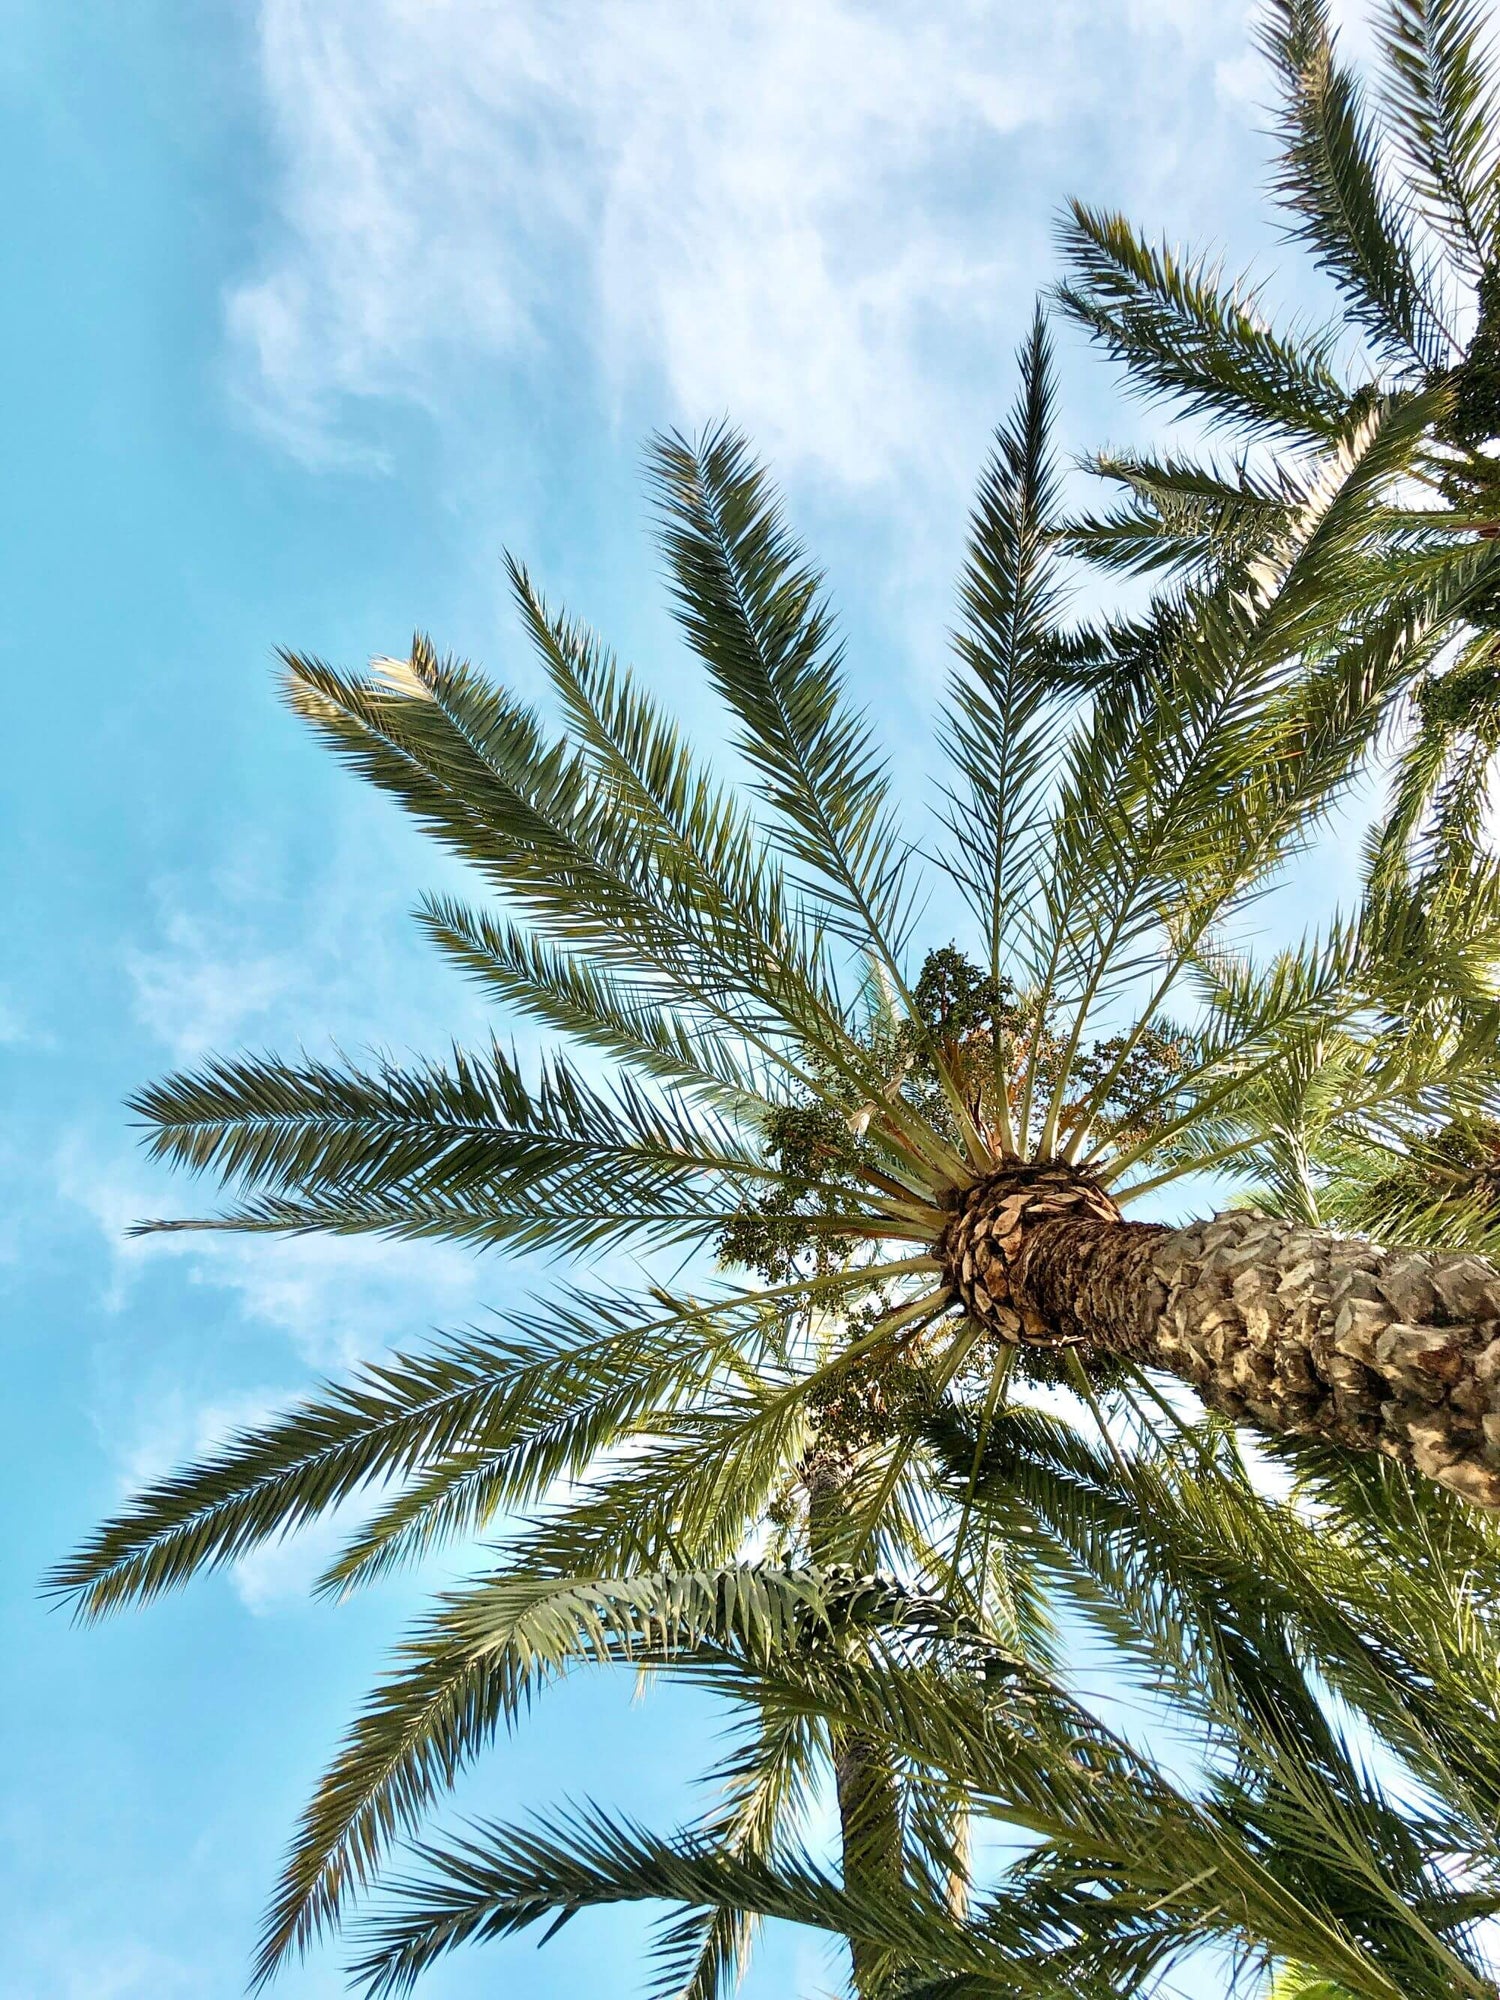 Dates Fruit palm tree